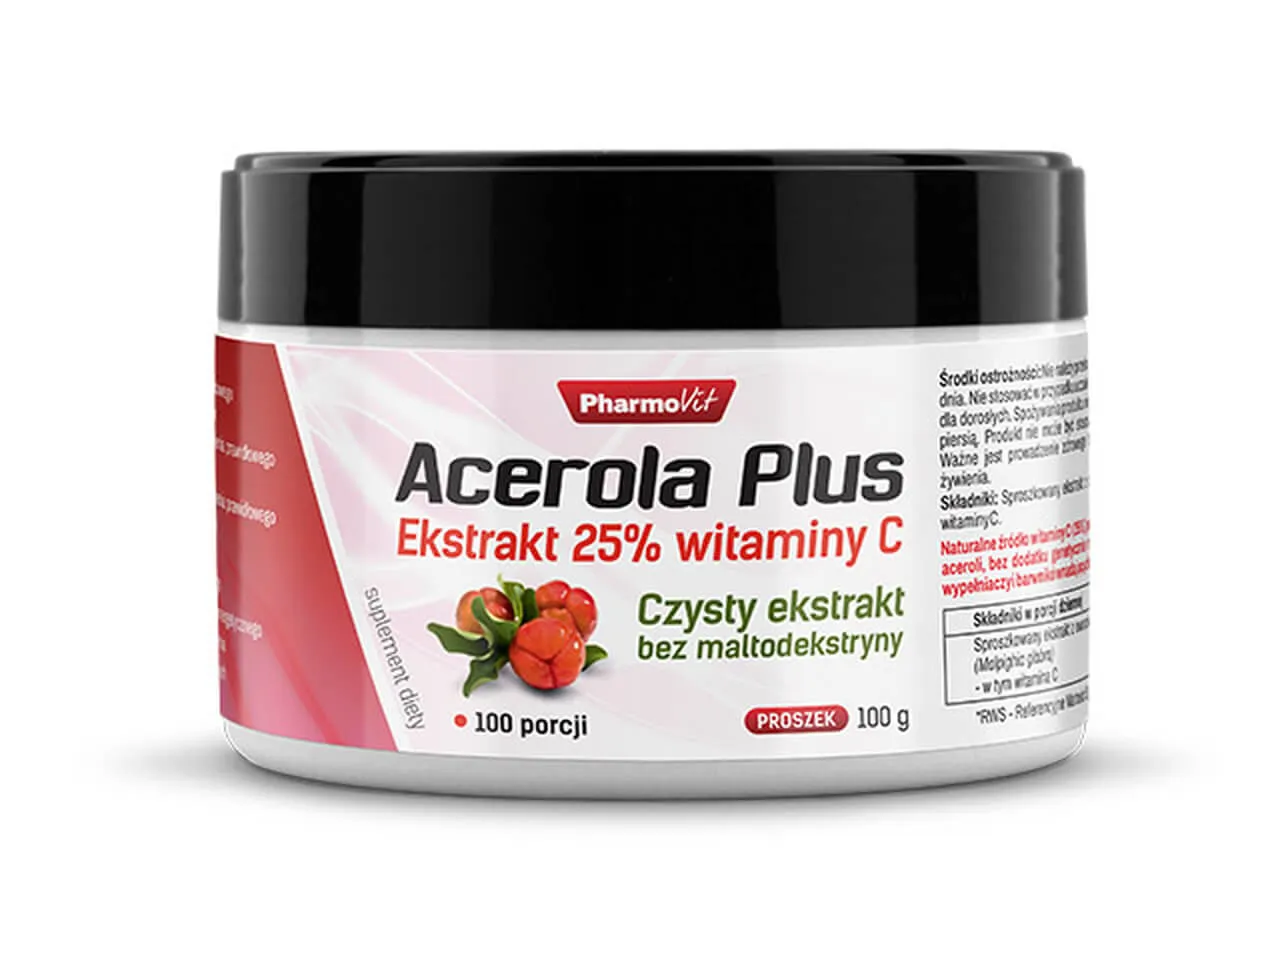 Acerola Plus Pharmovit, suplement diety, 100 g